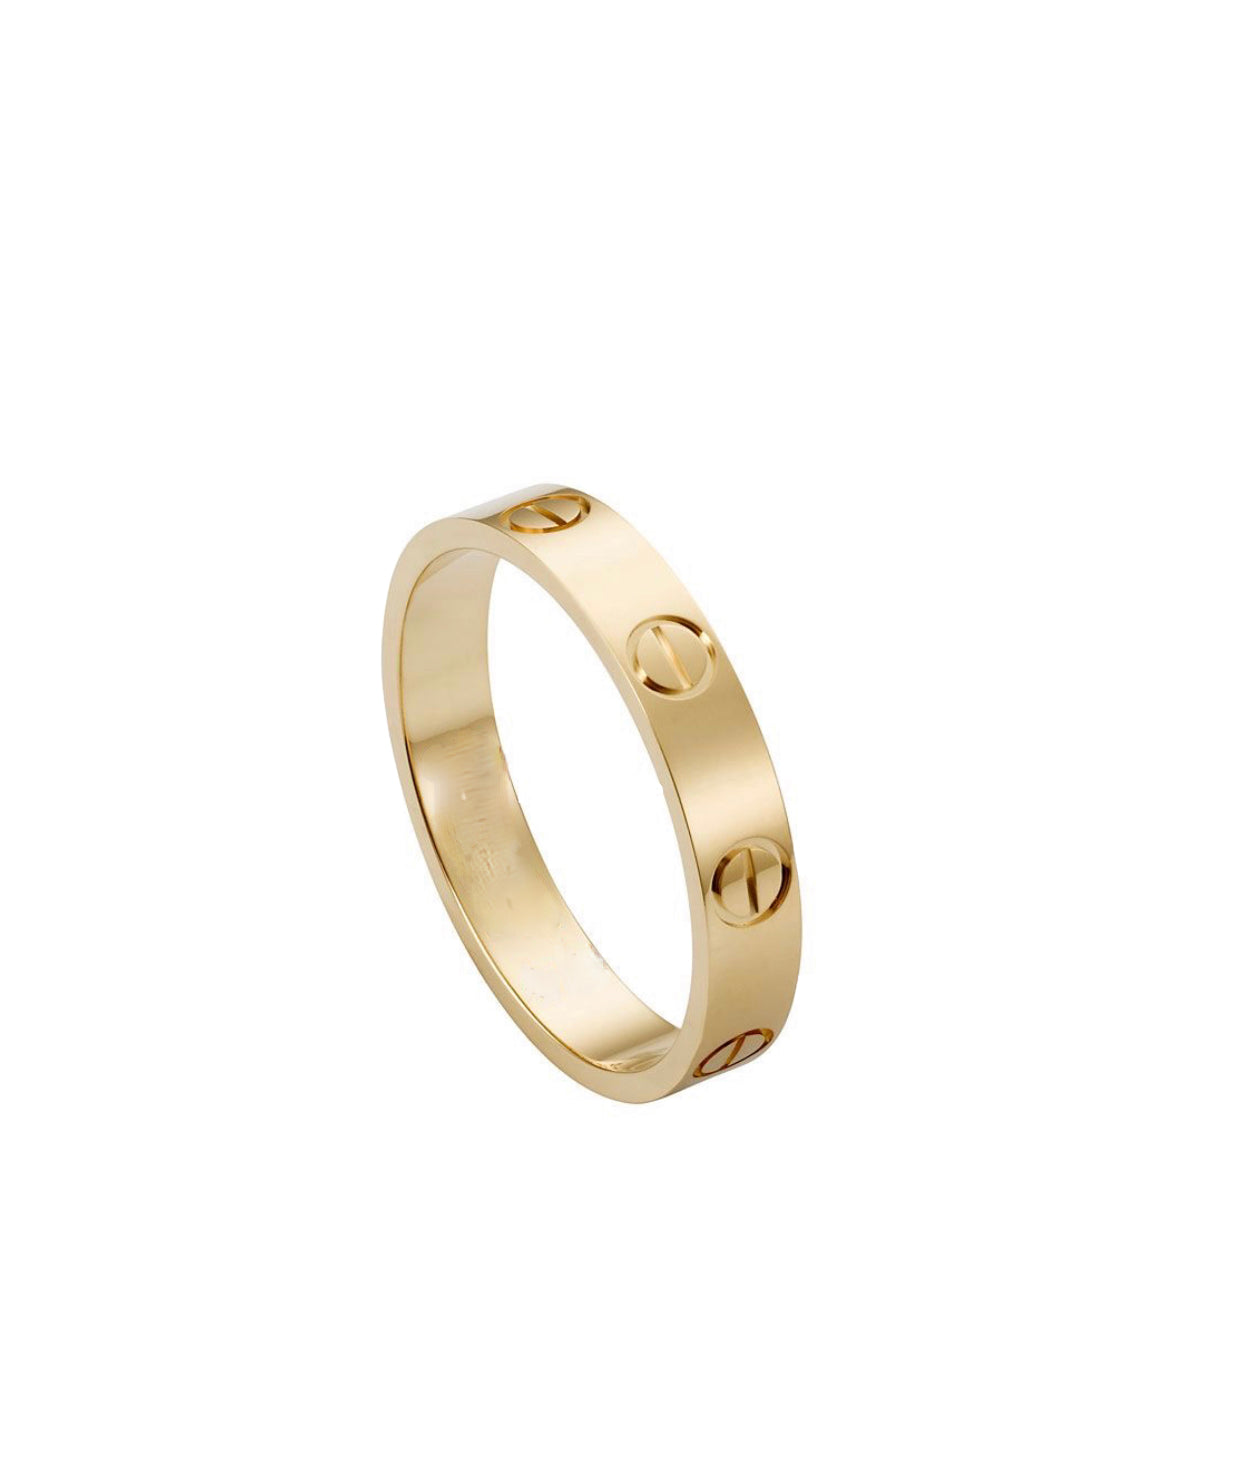 Gold C ring